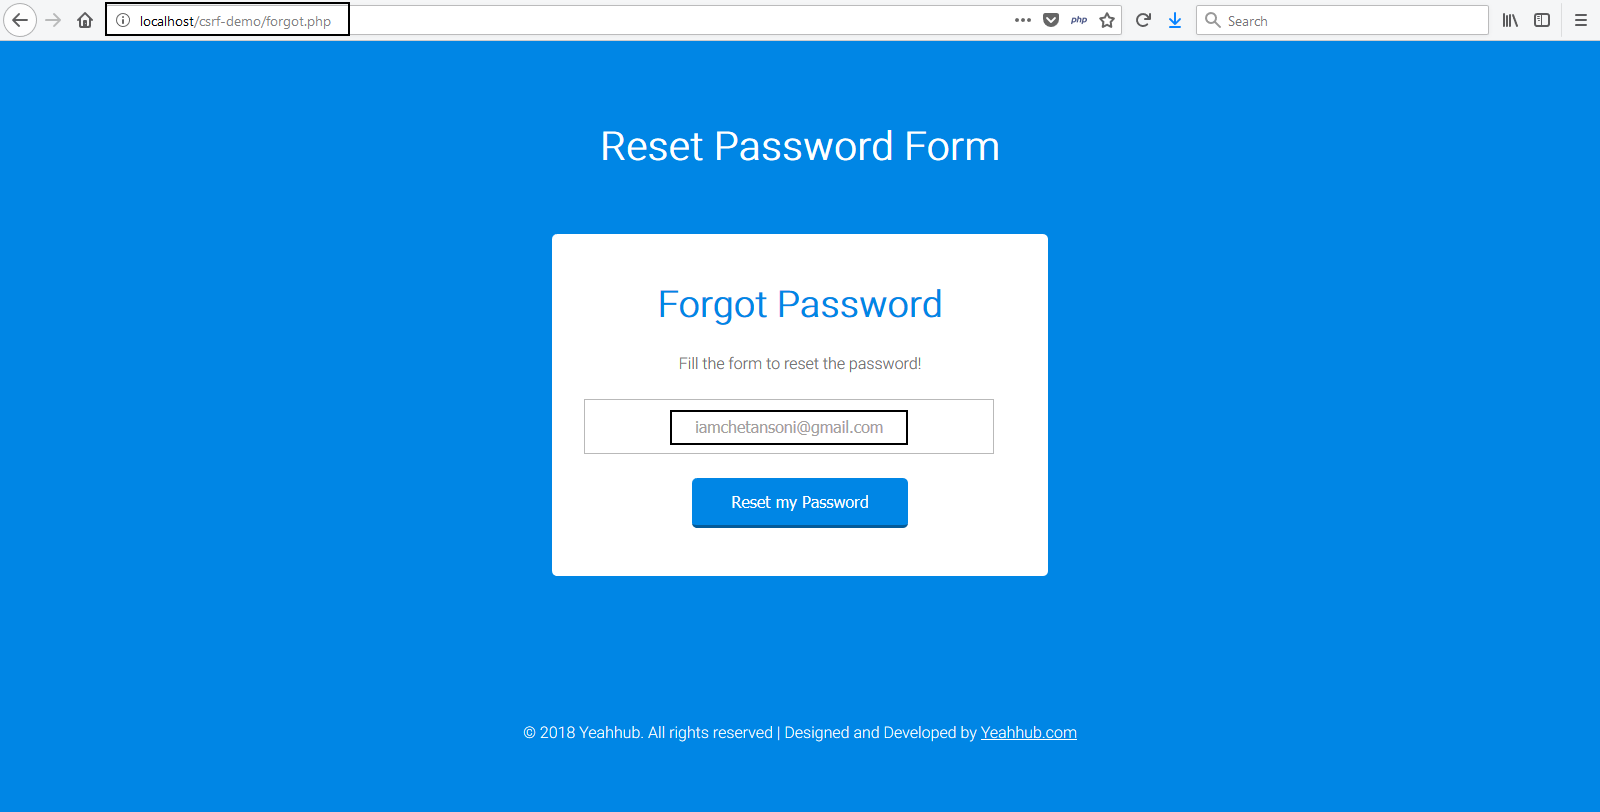 Password checkword. Password reset Page. Forgot password. Change password form. Forgot password Page Design.